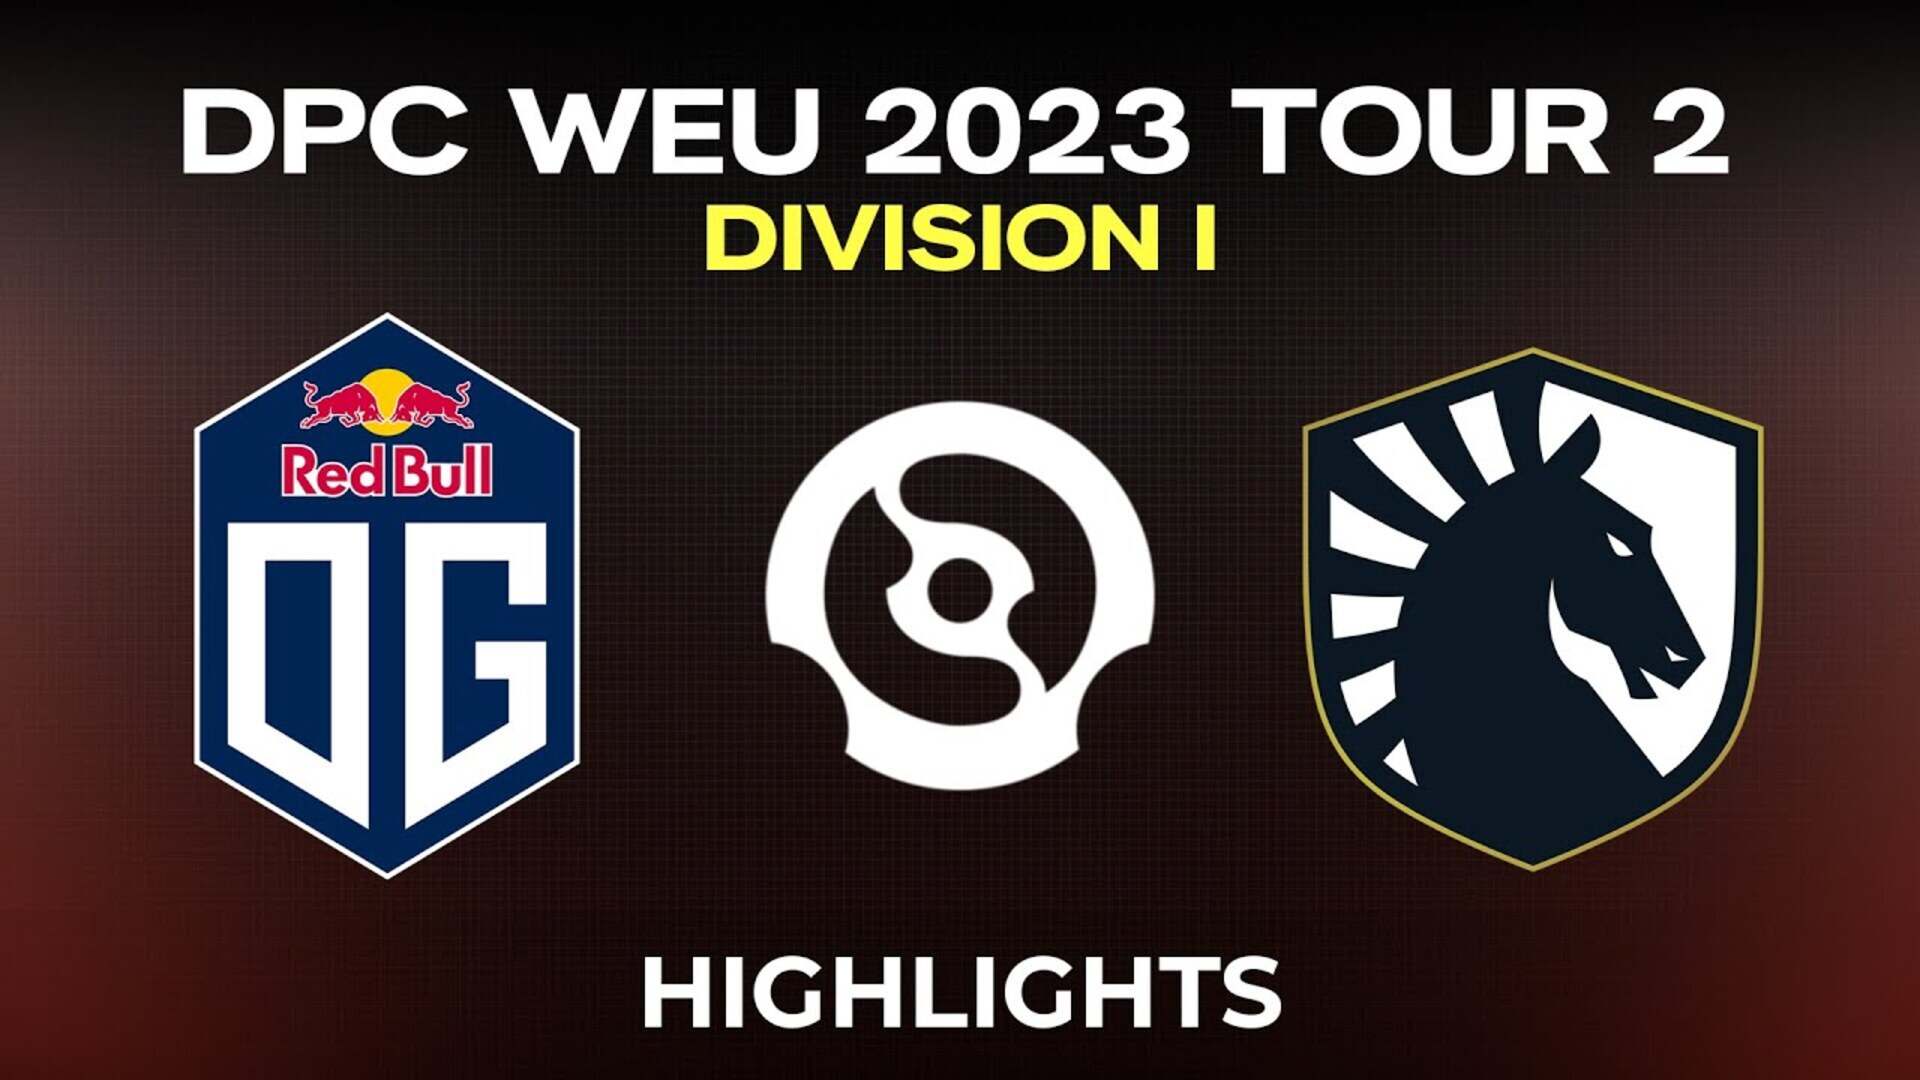 2023 dpc western europe tour 2 division 2